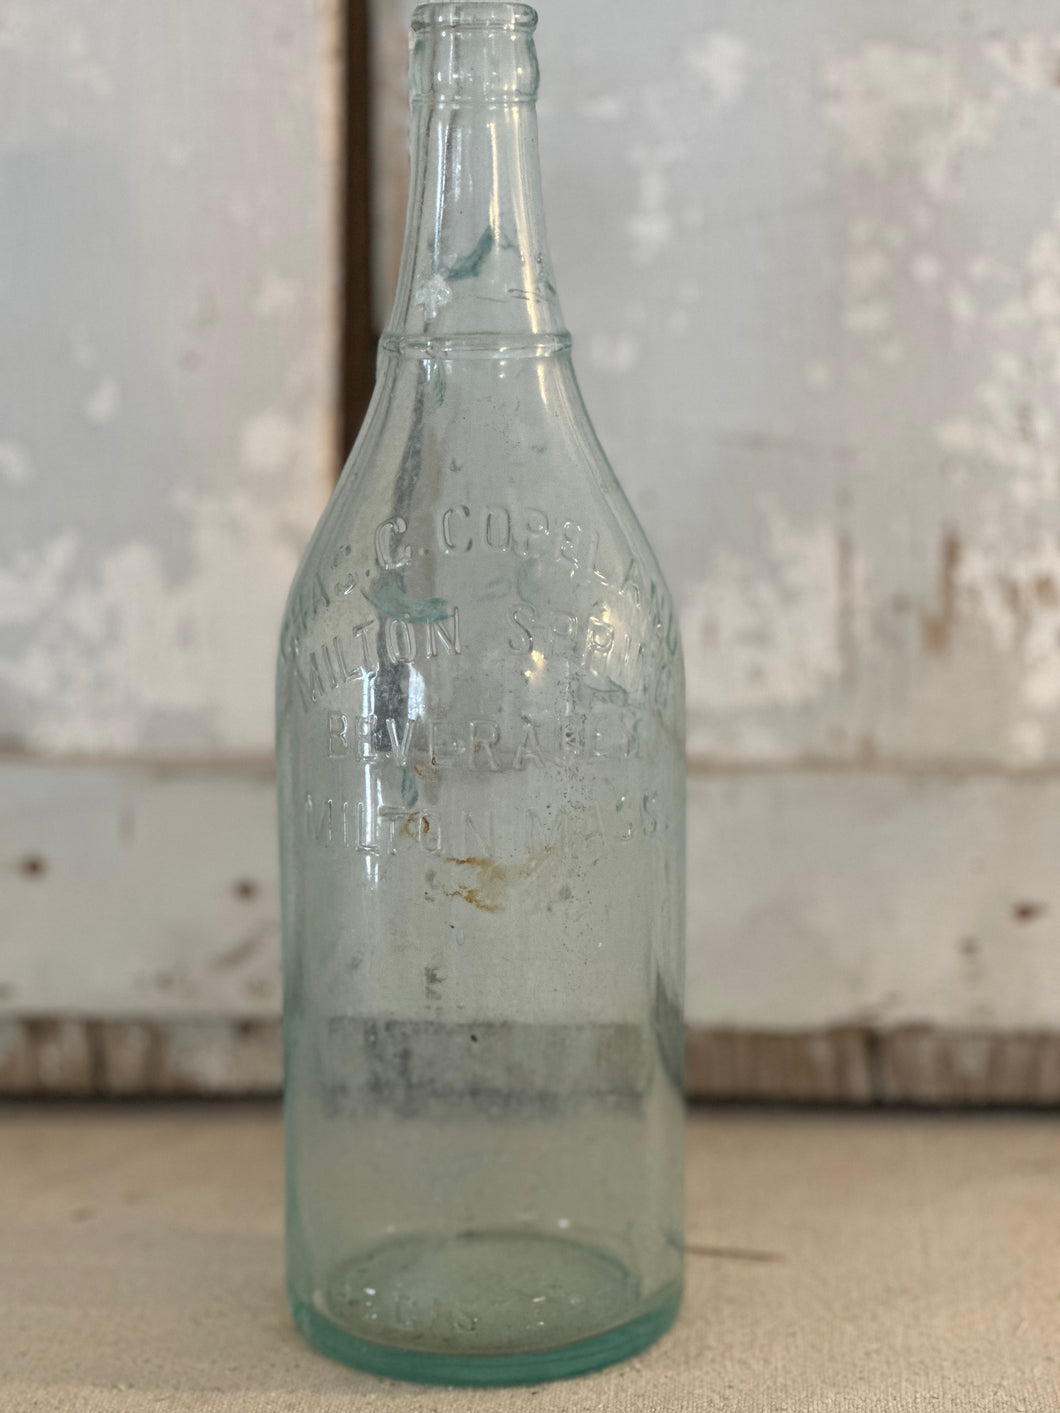 chas c. copeland milton spring beverages milton, mass aqua bottle